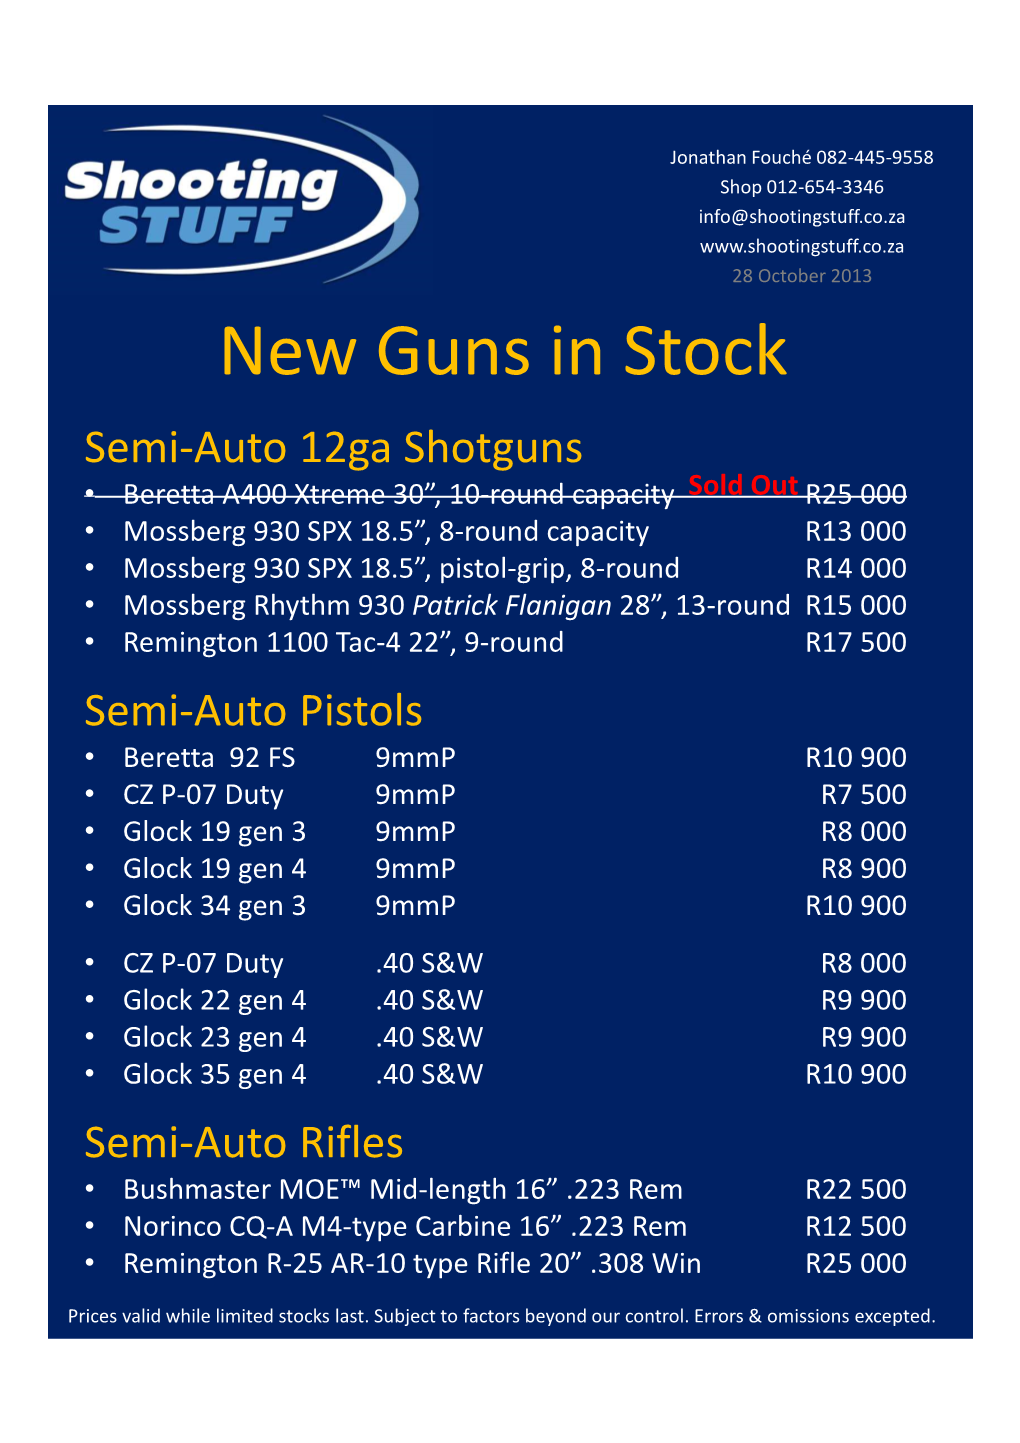 New Guns in Stock 2013-10-28